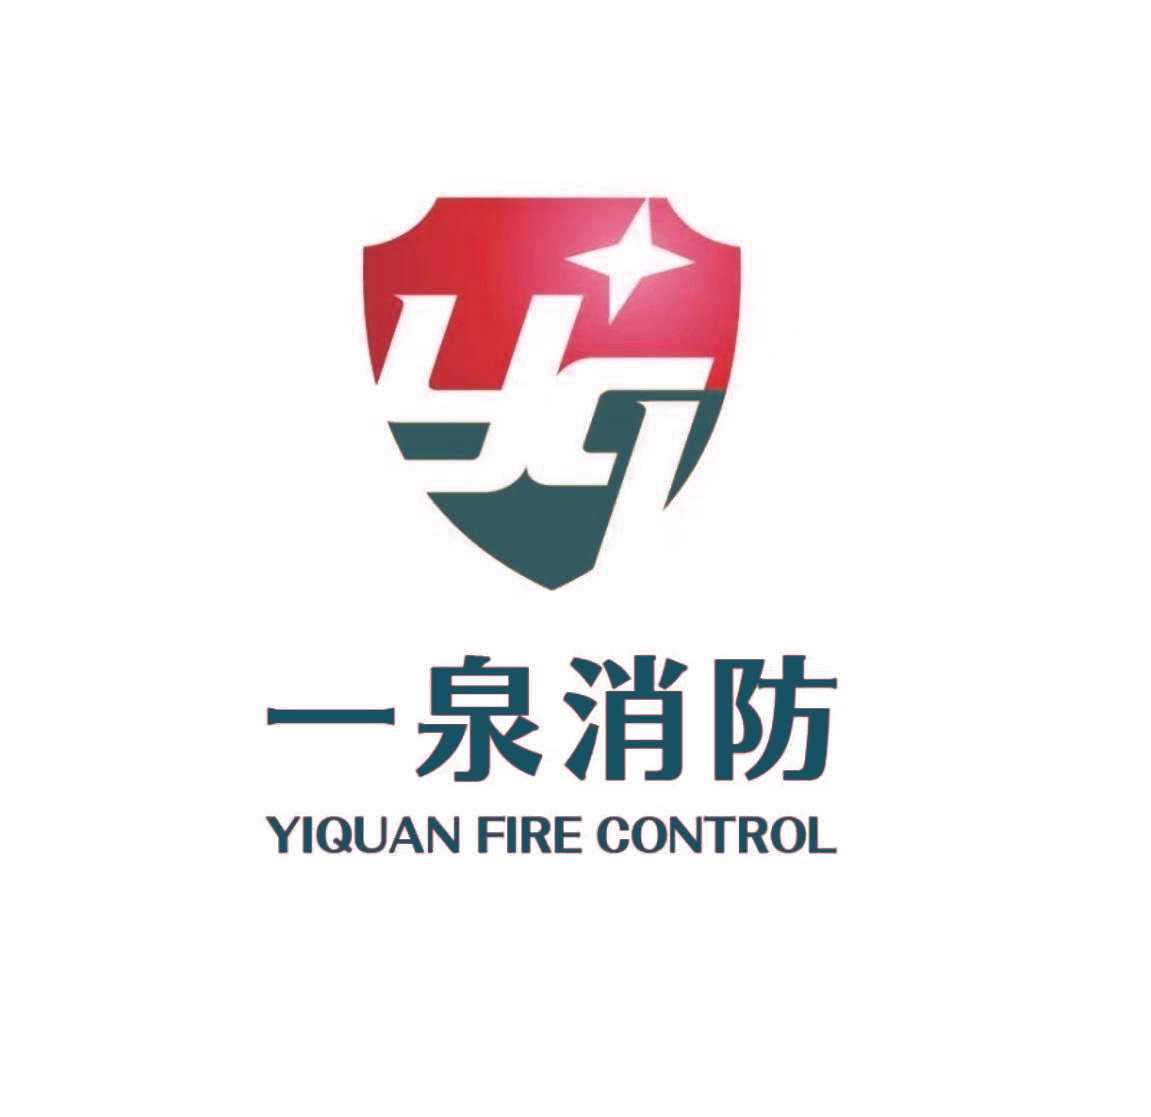 一泉消防 YQ YIQUAN FIRE CONTROL